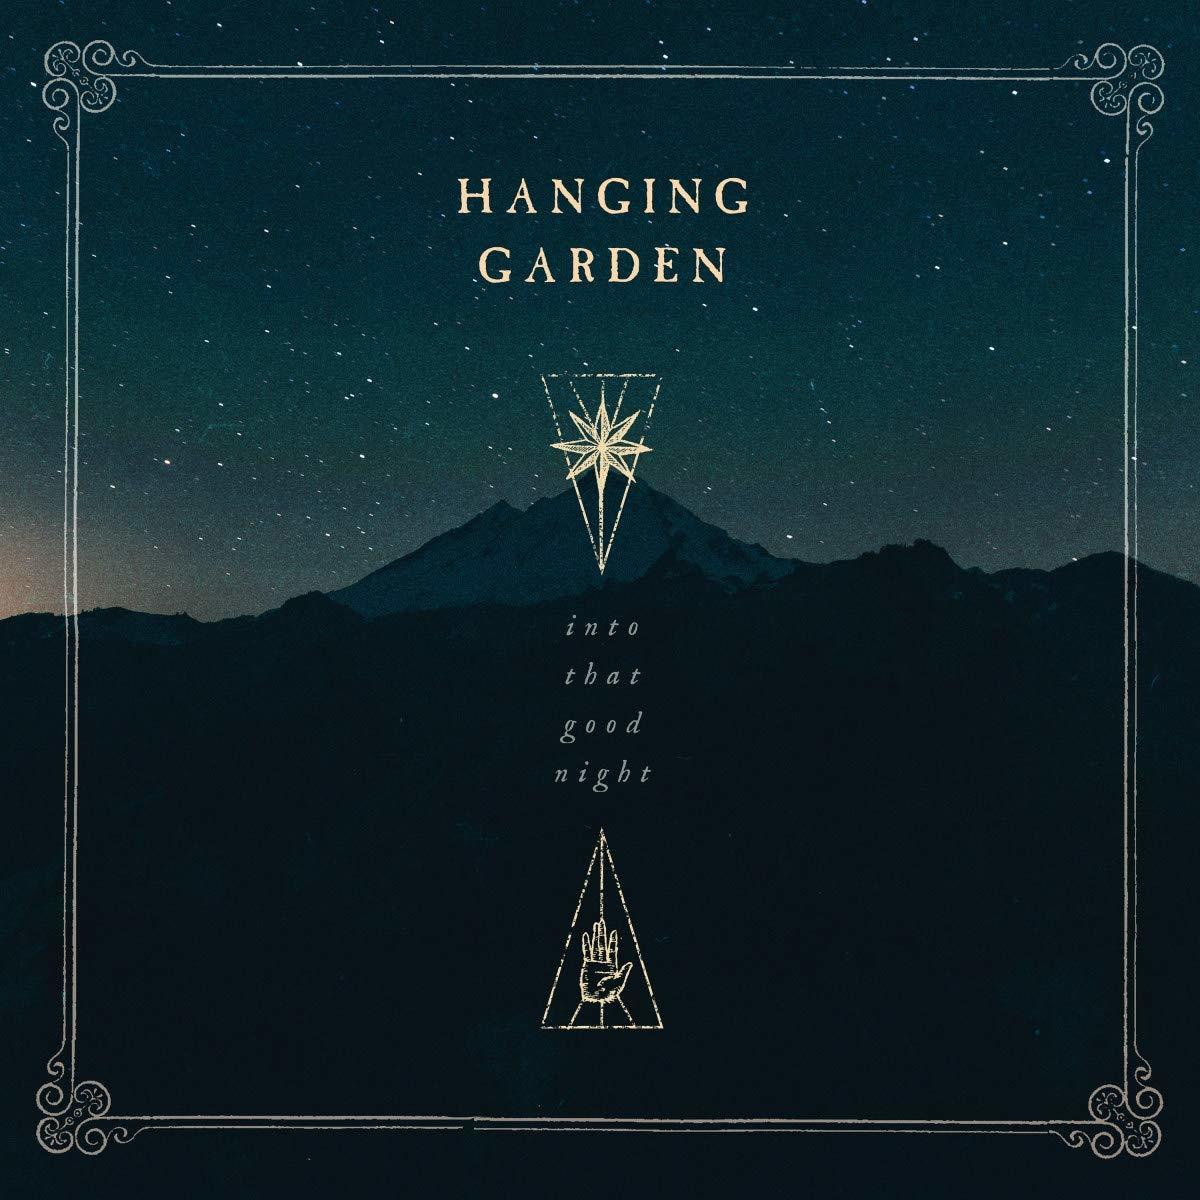 Garden Into (Vinyl) Hanging Night - That - Good